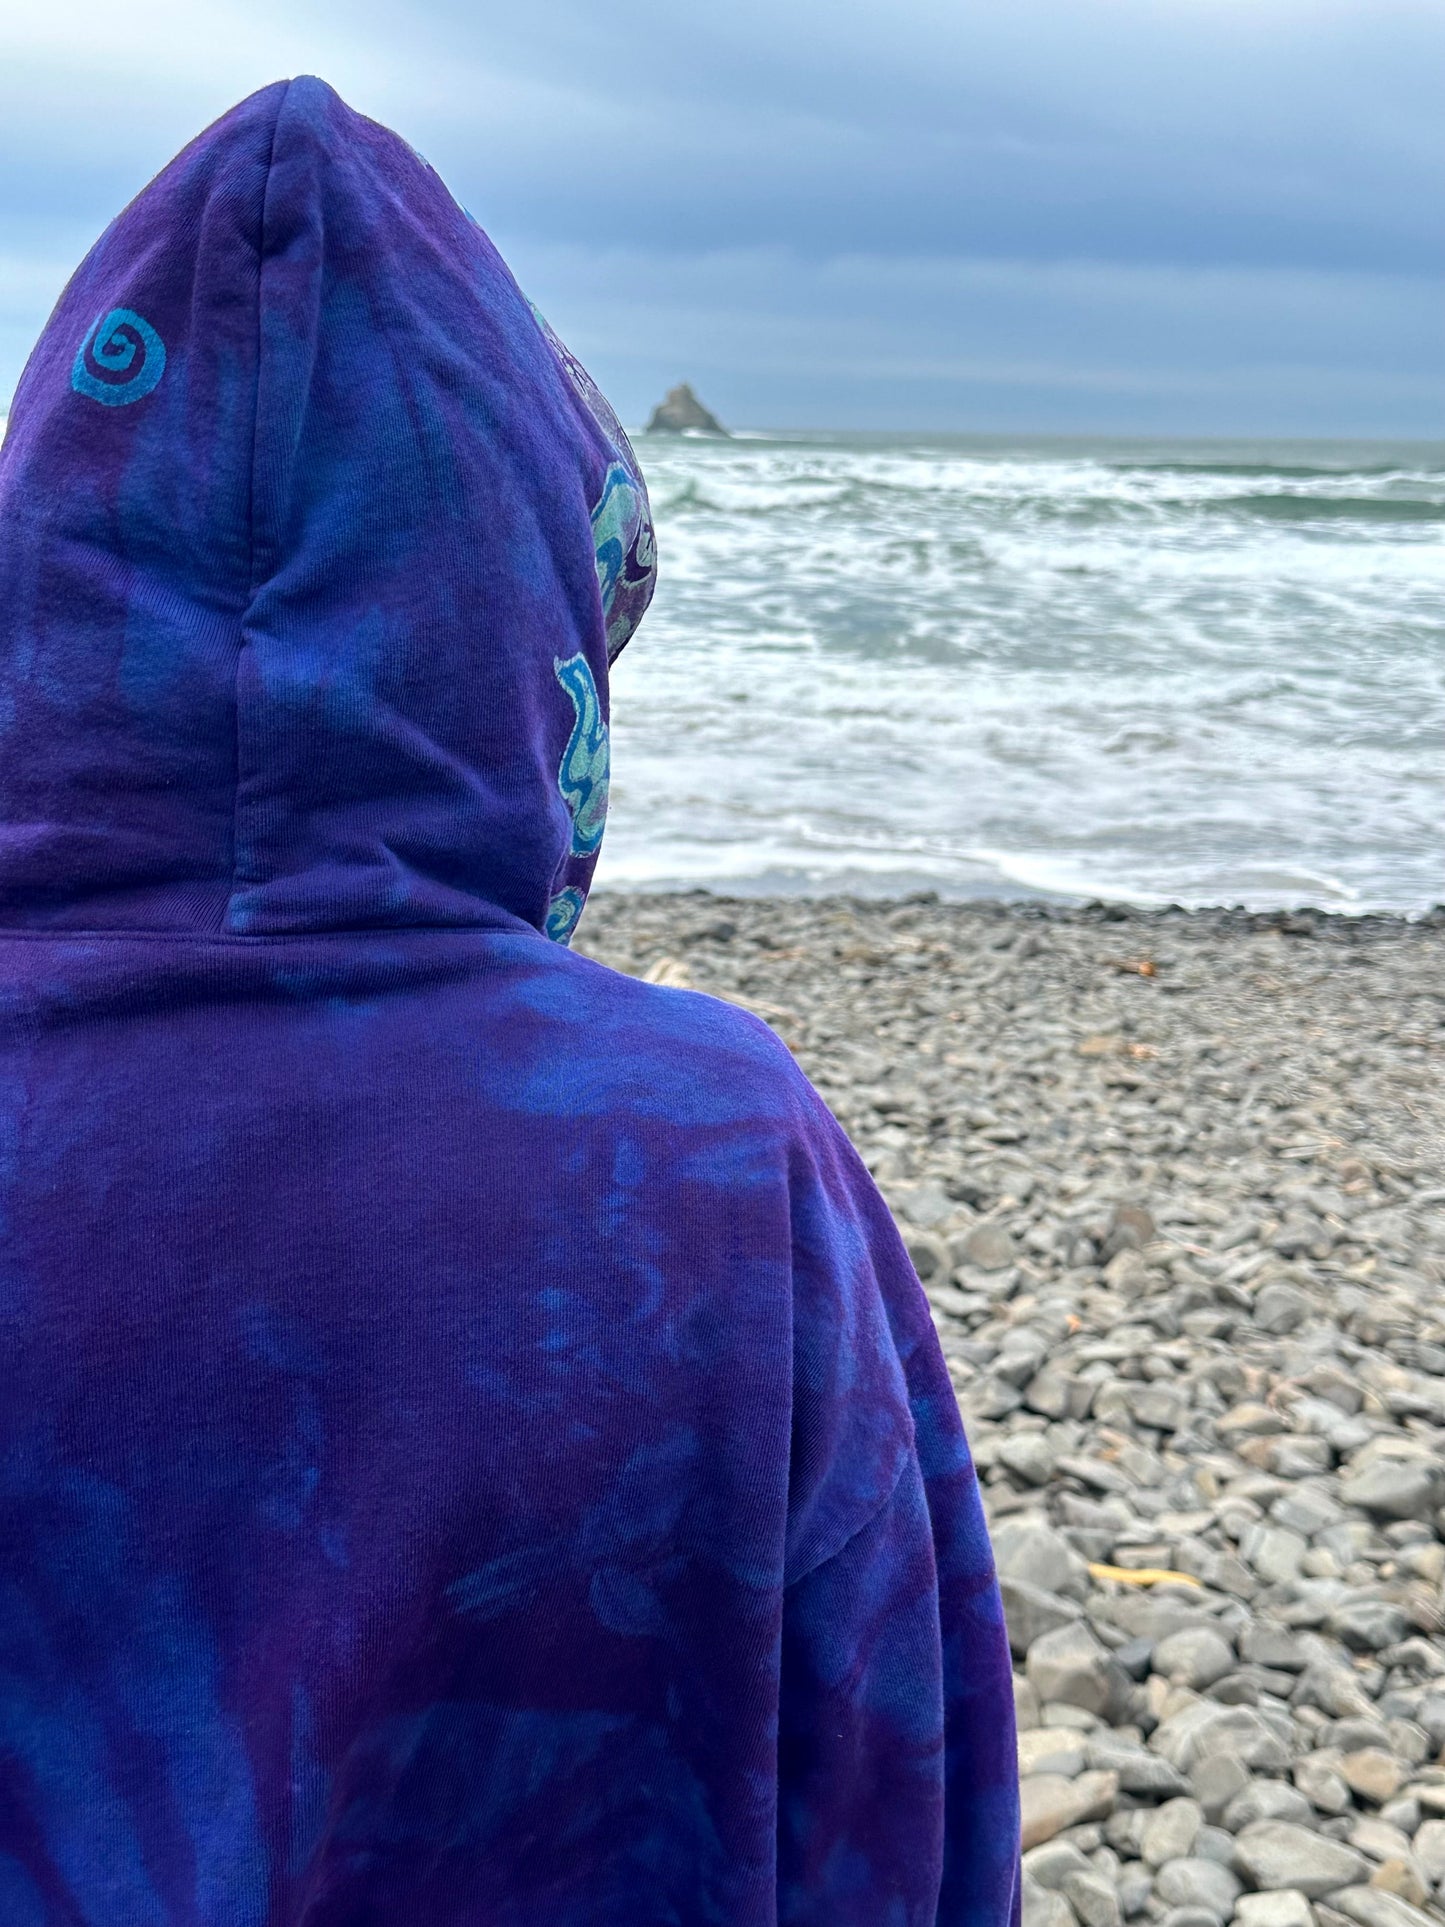 Swell Swirls in Purple Waves Handcrafted Batik Zipper Hoodie - Unisex Size Large hoodie batikwalla 